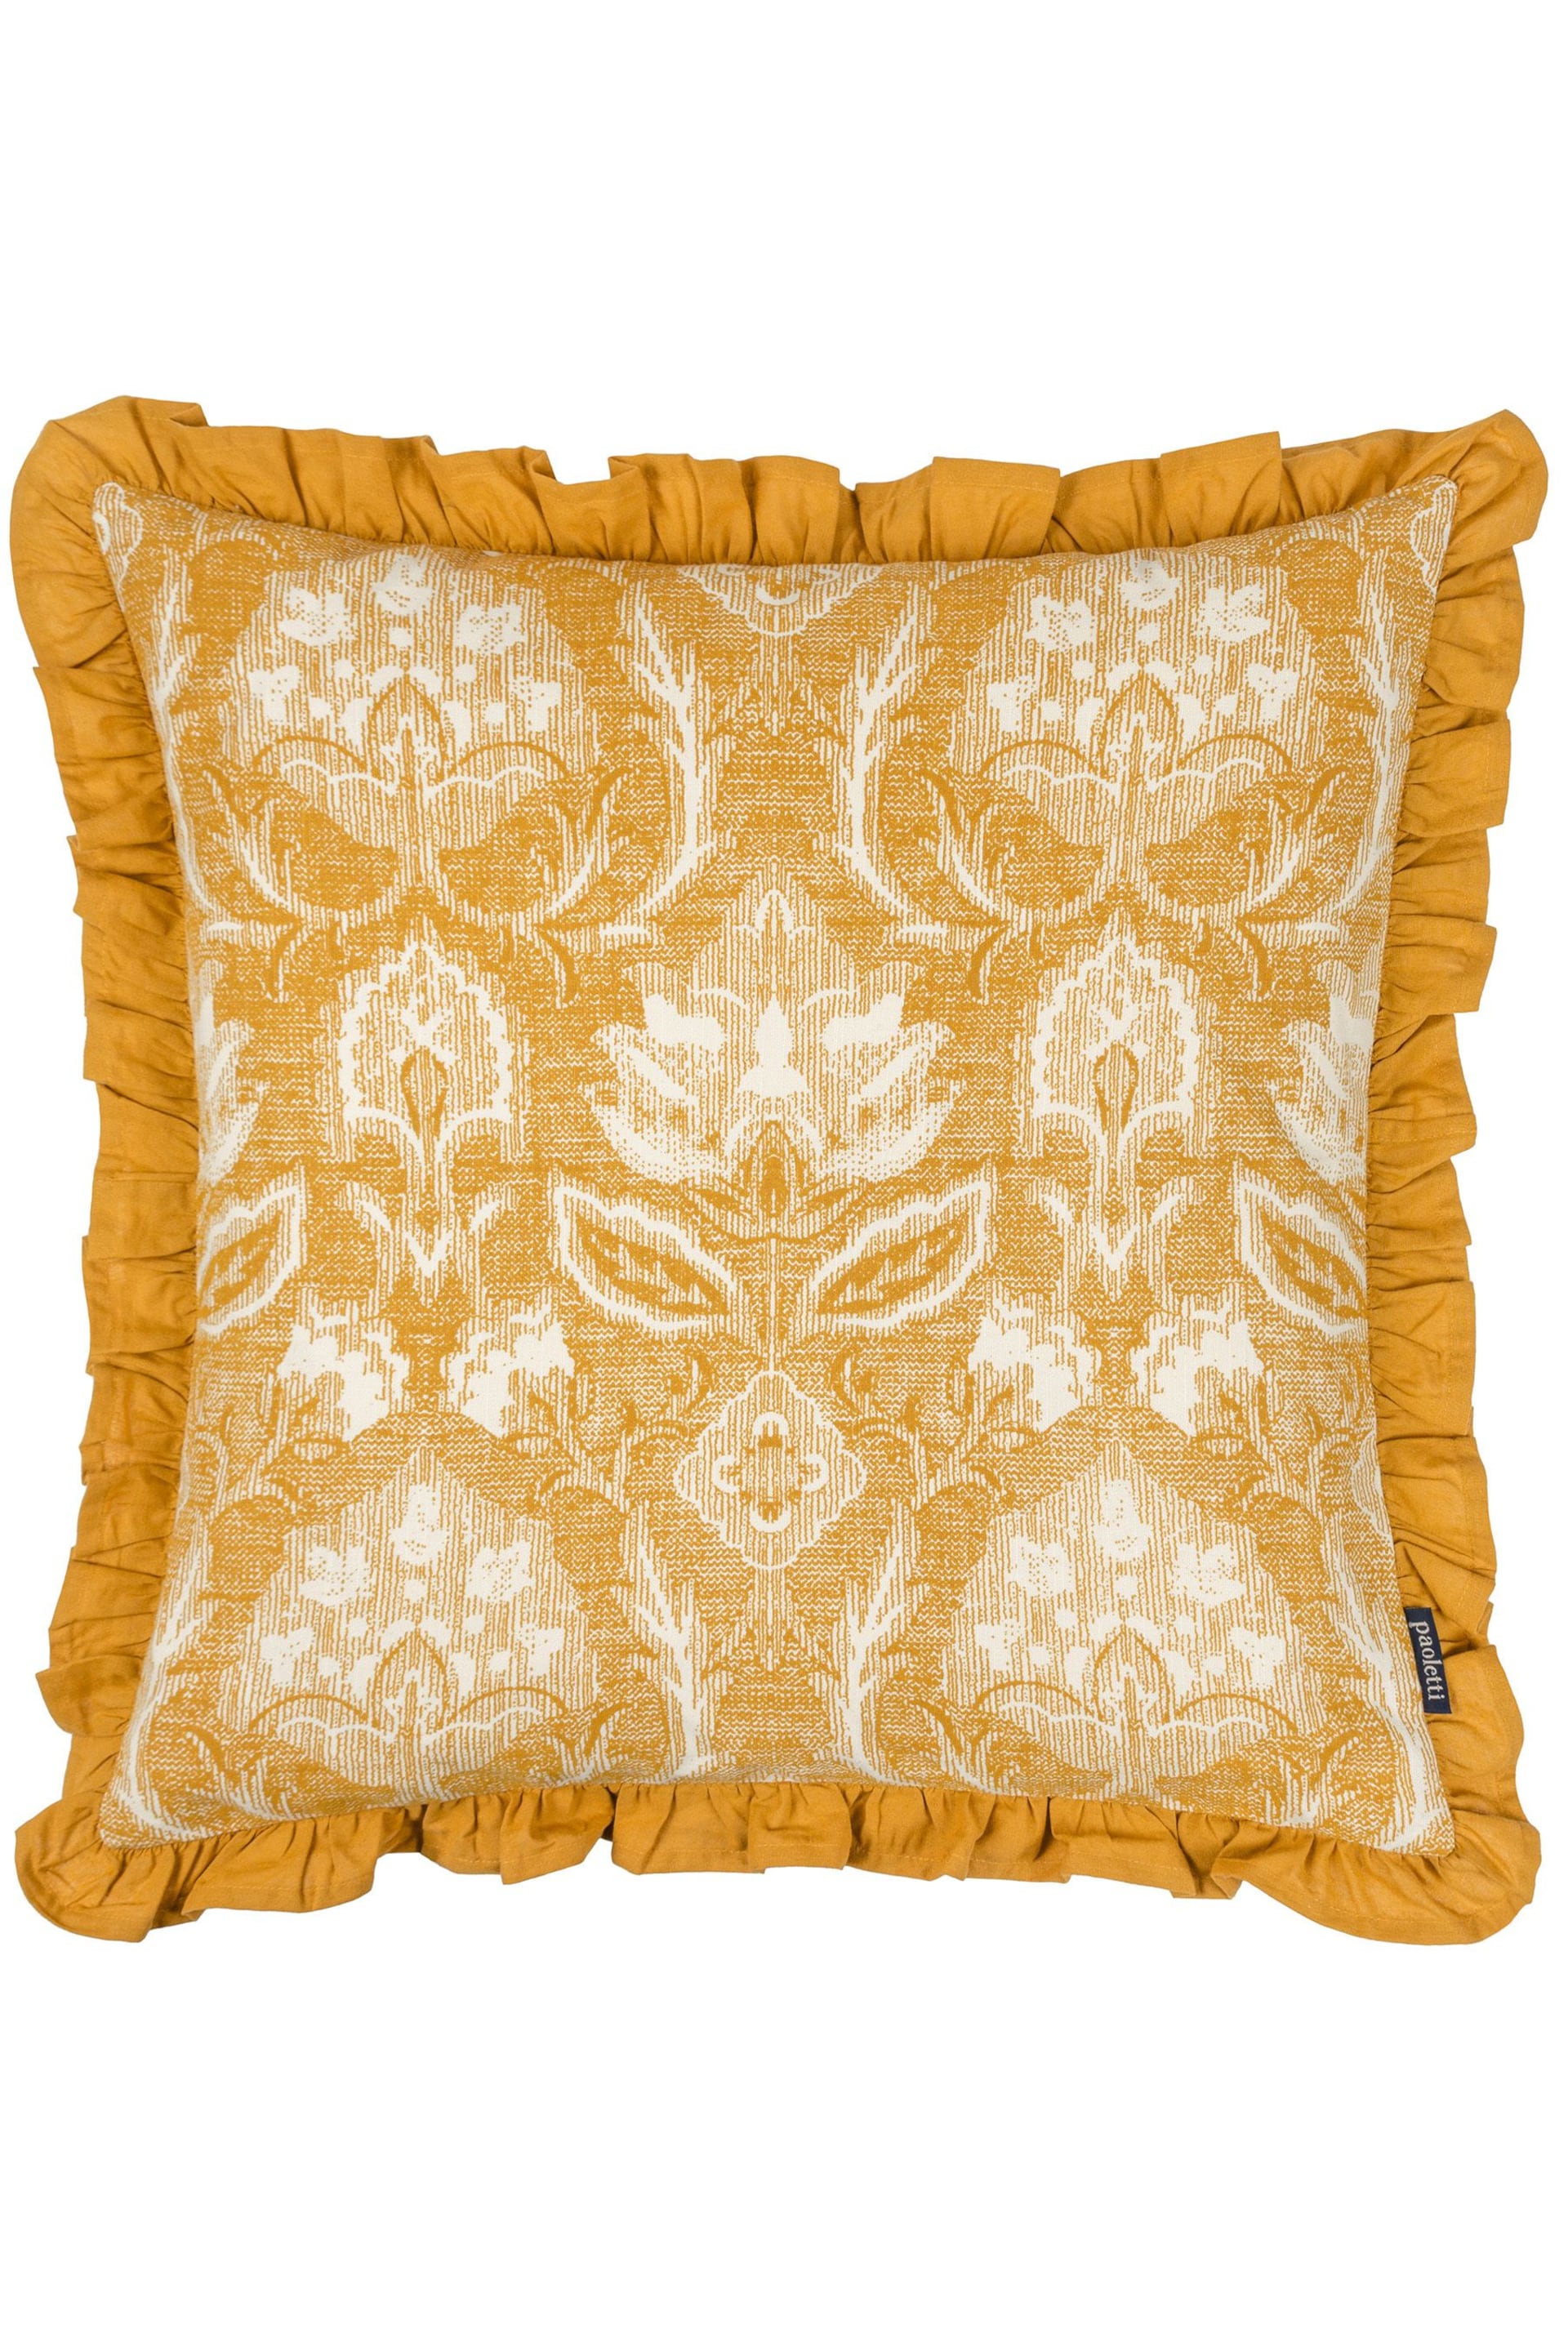 Riva Paoletti Ochre Yellow Kirkton Floral Tile Cotton Pleated Cushion - Image 3 of 6